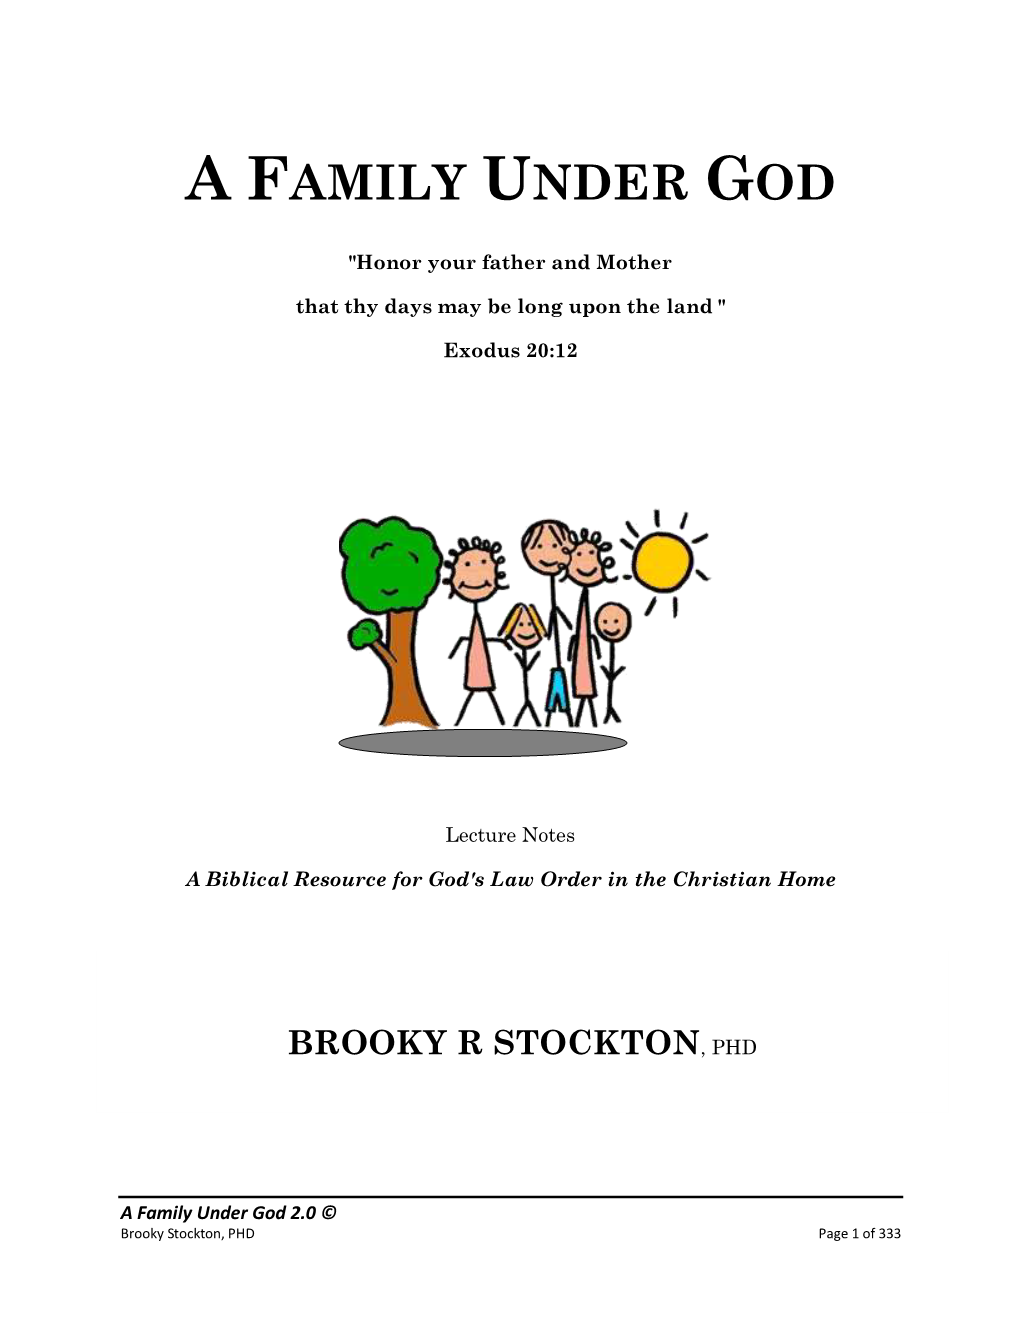 A Family Under God, Form #17.001